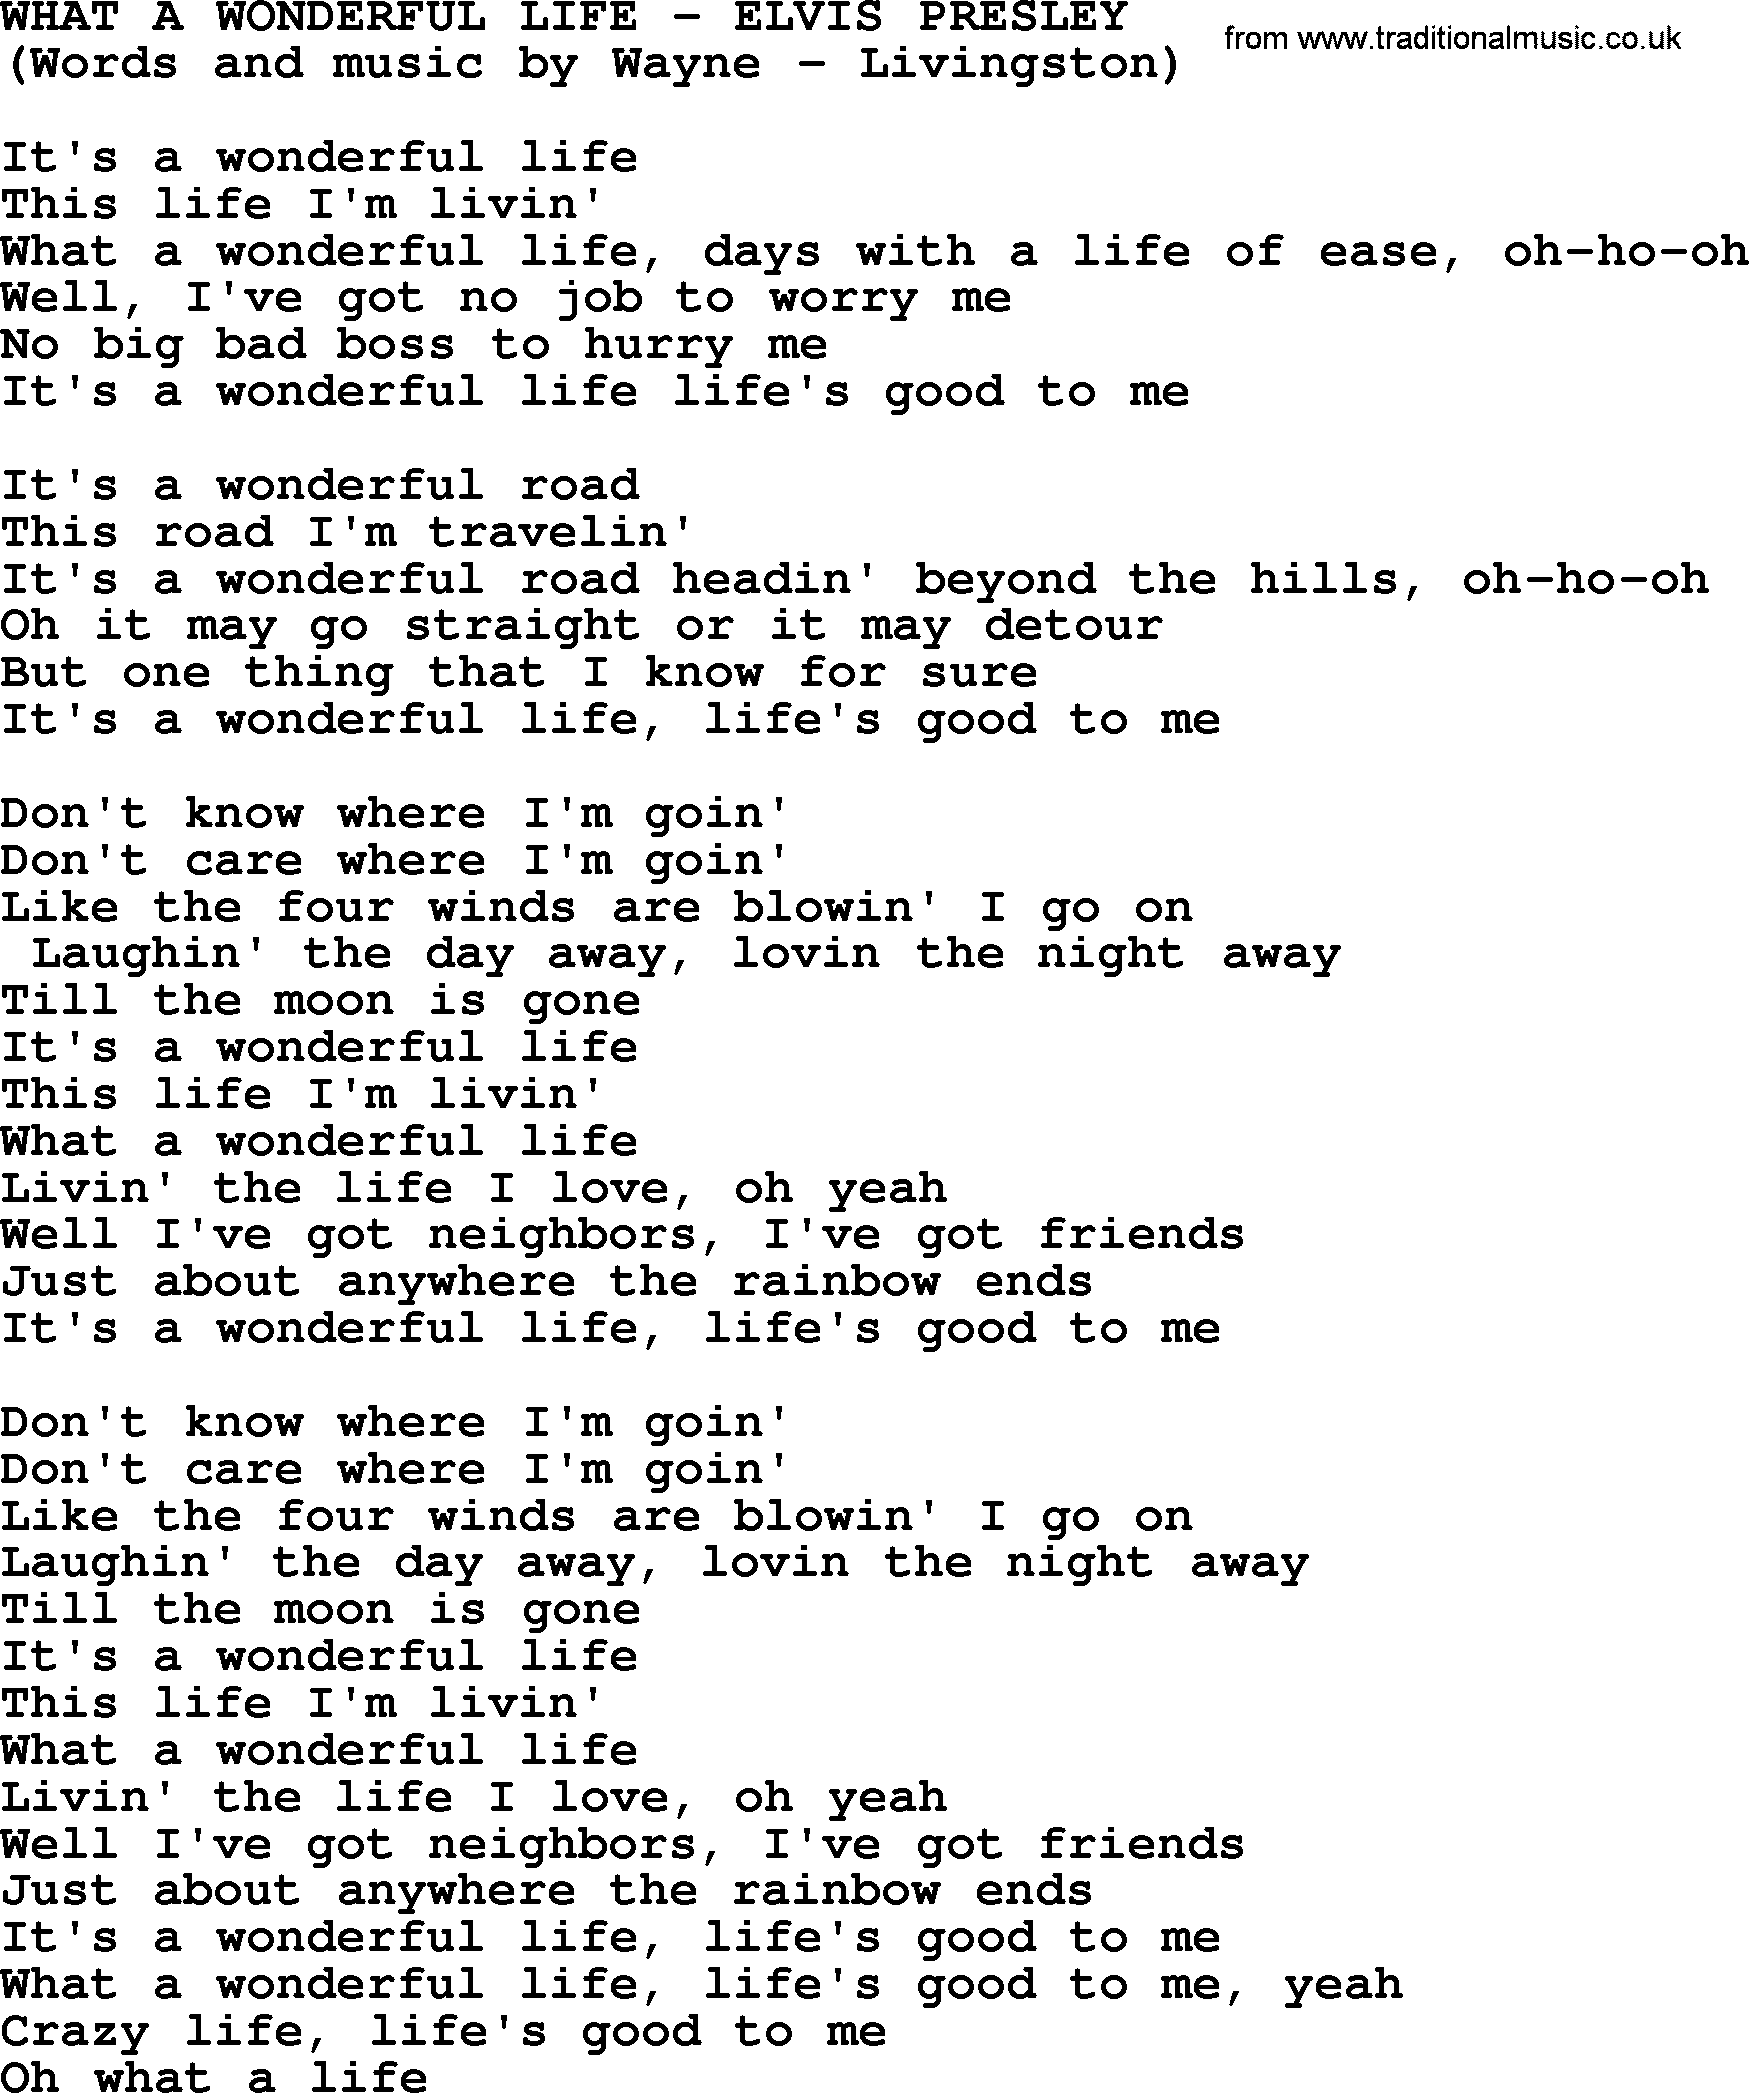 Elvis Presley song: What A Wonderful Life lyrics